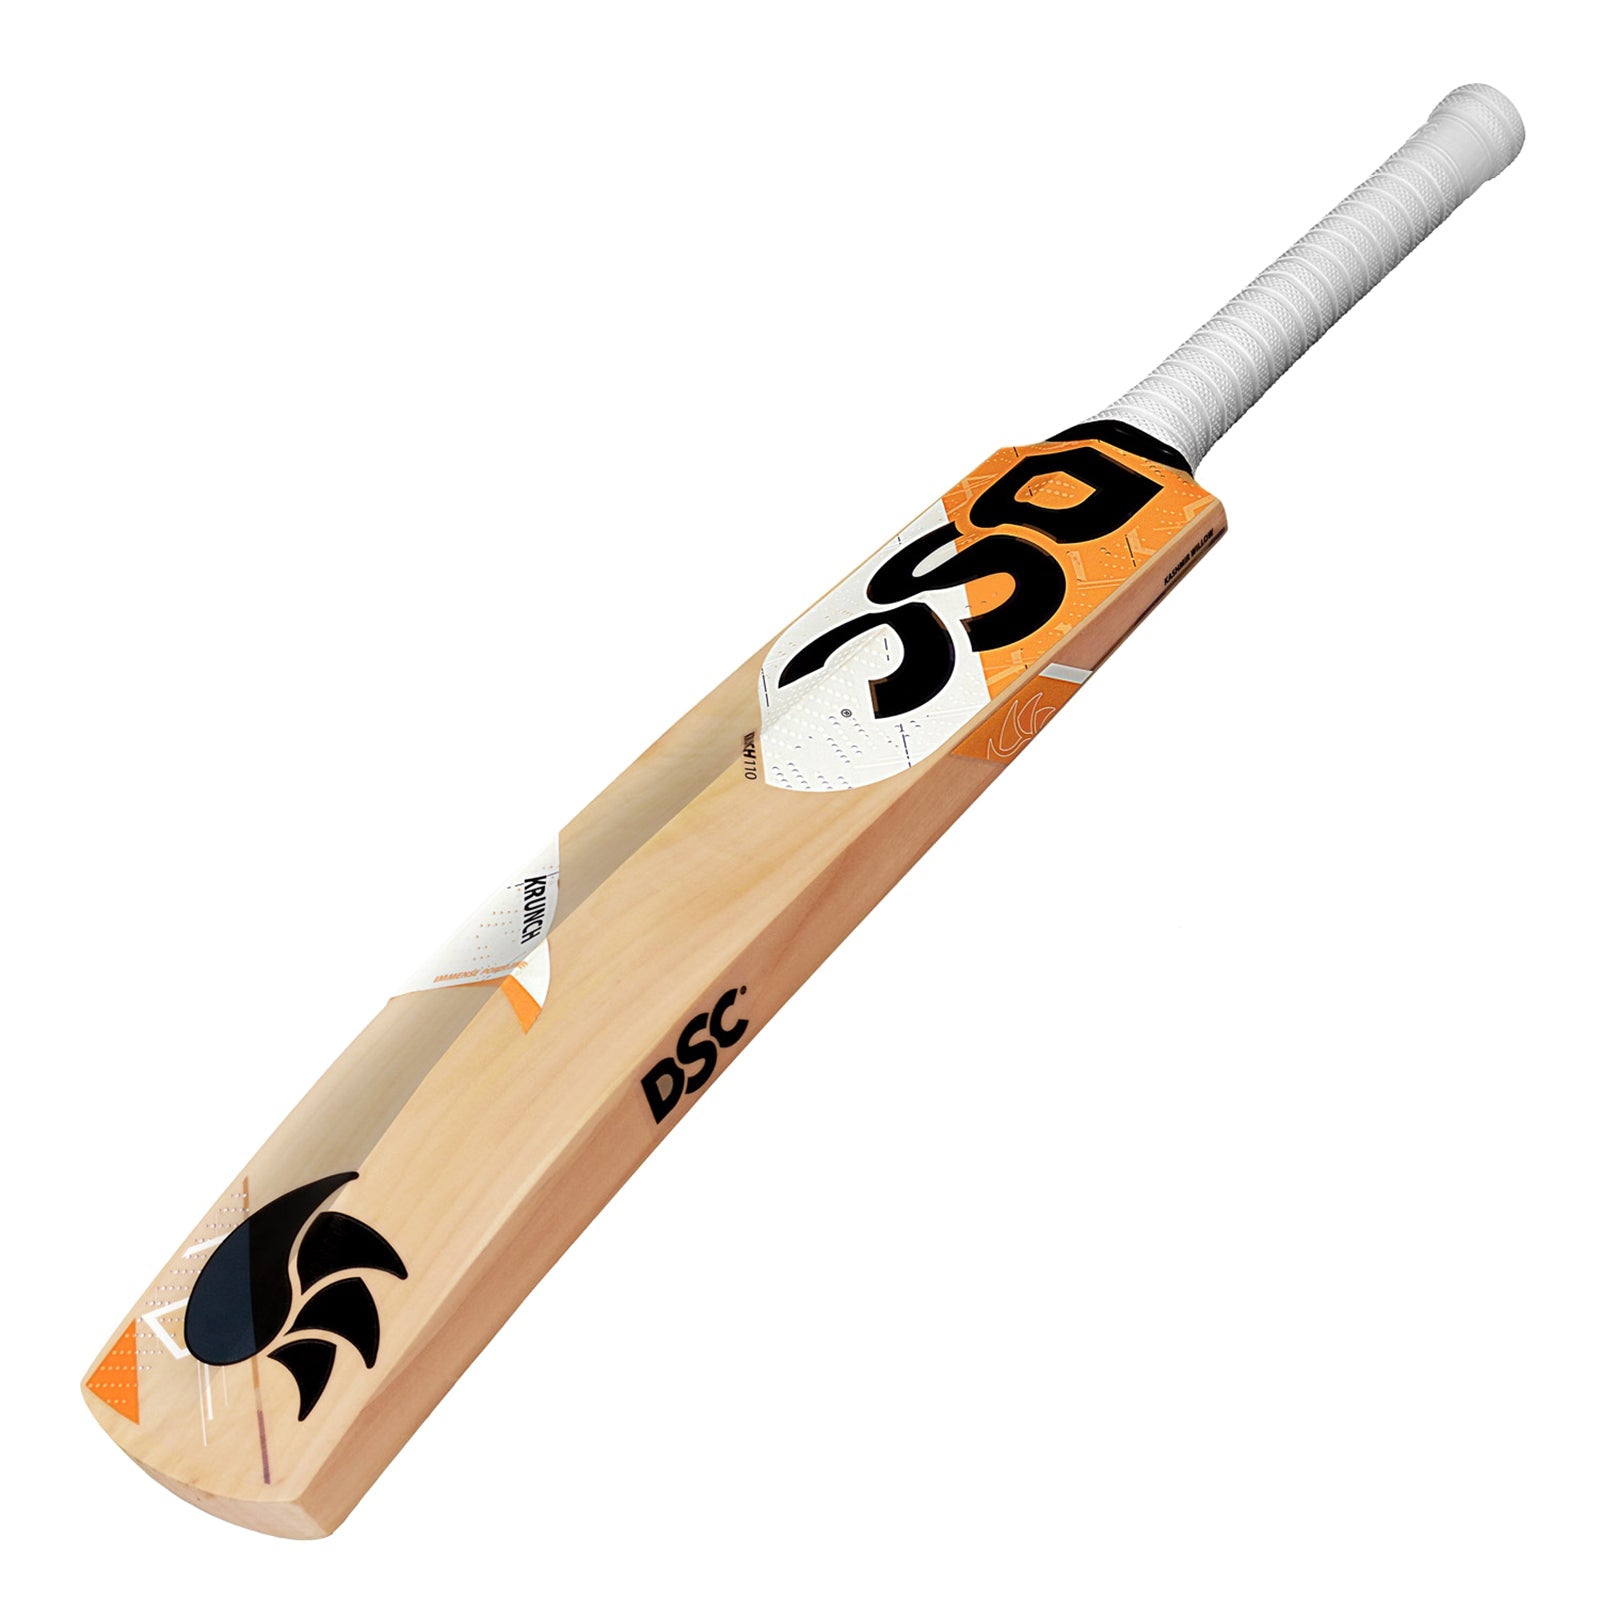 DSC Krunch 110 Kashmir Willow Cricket Bat - Size 2